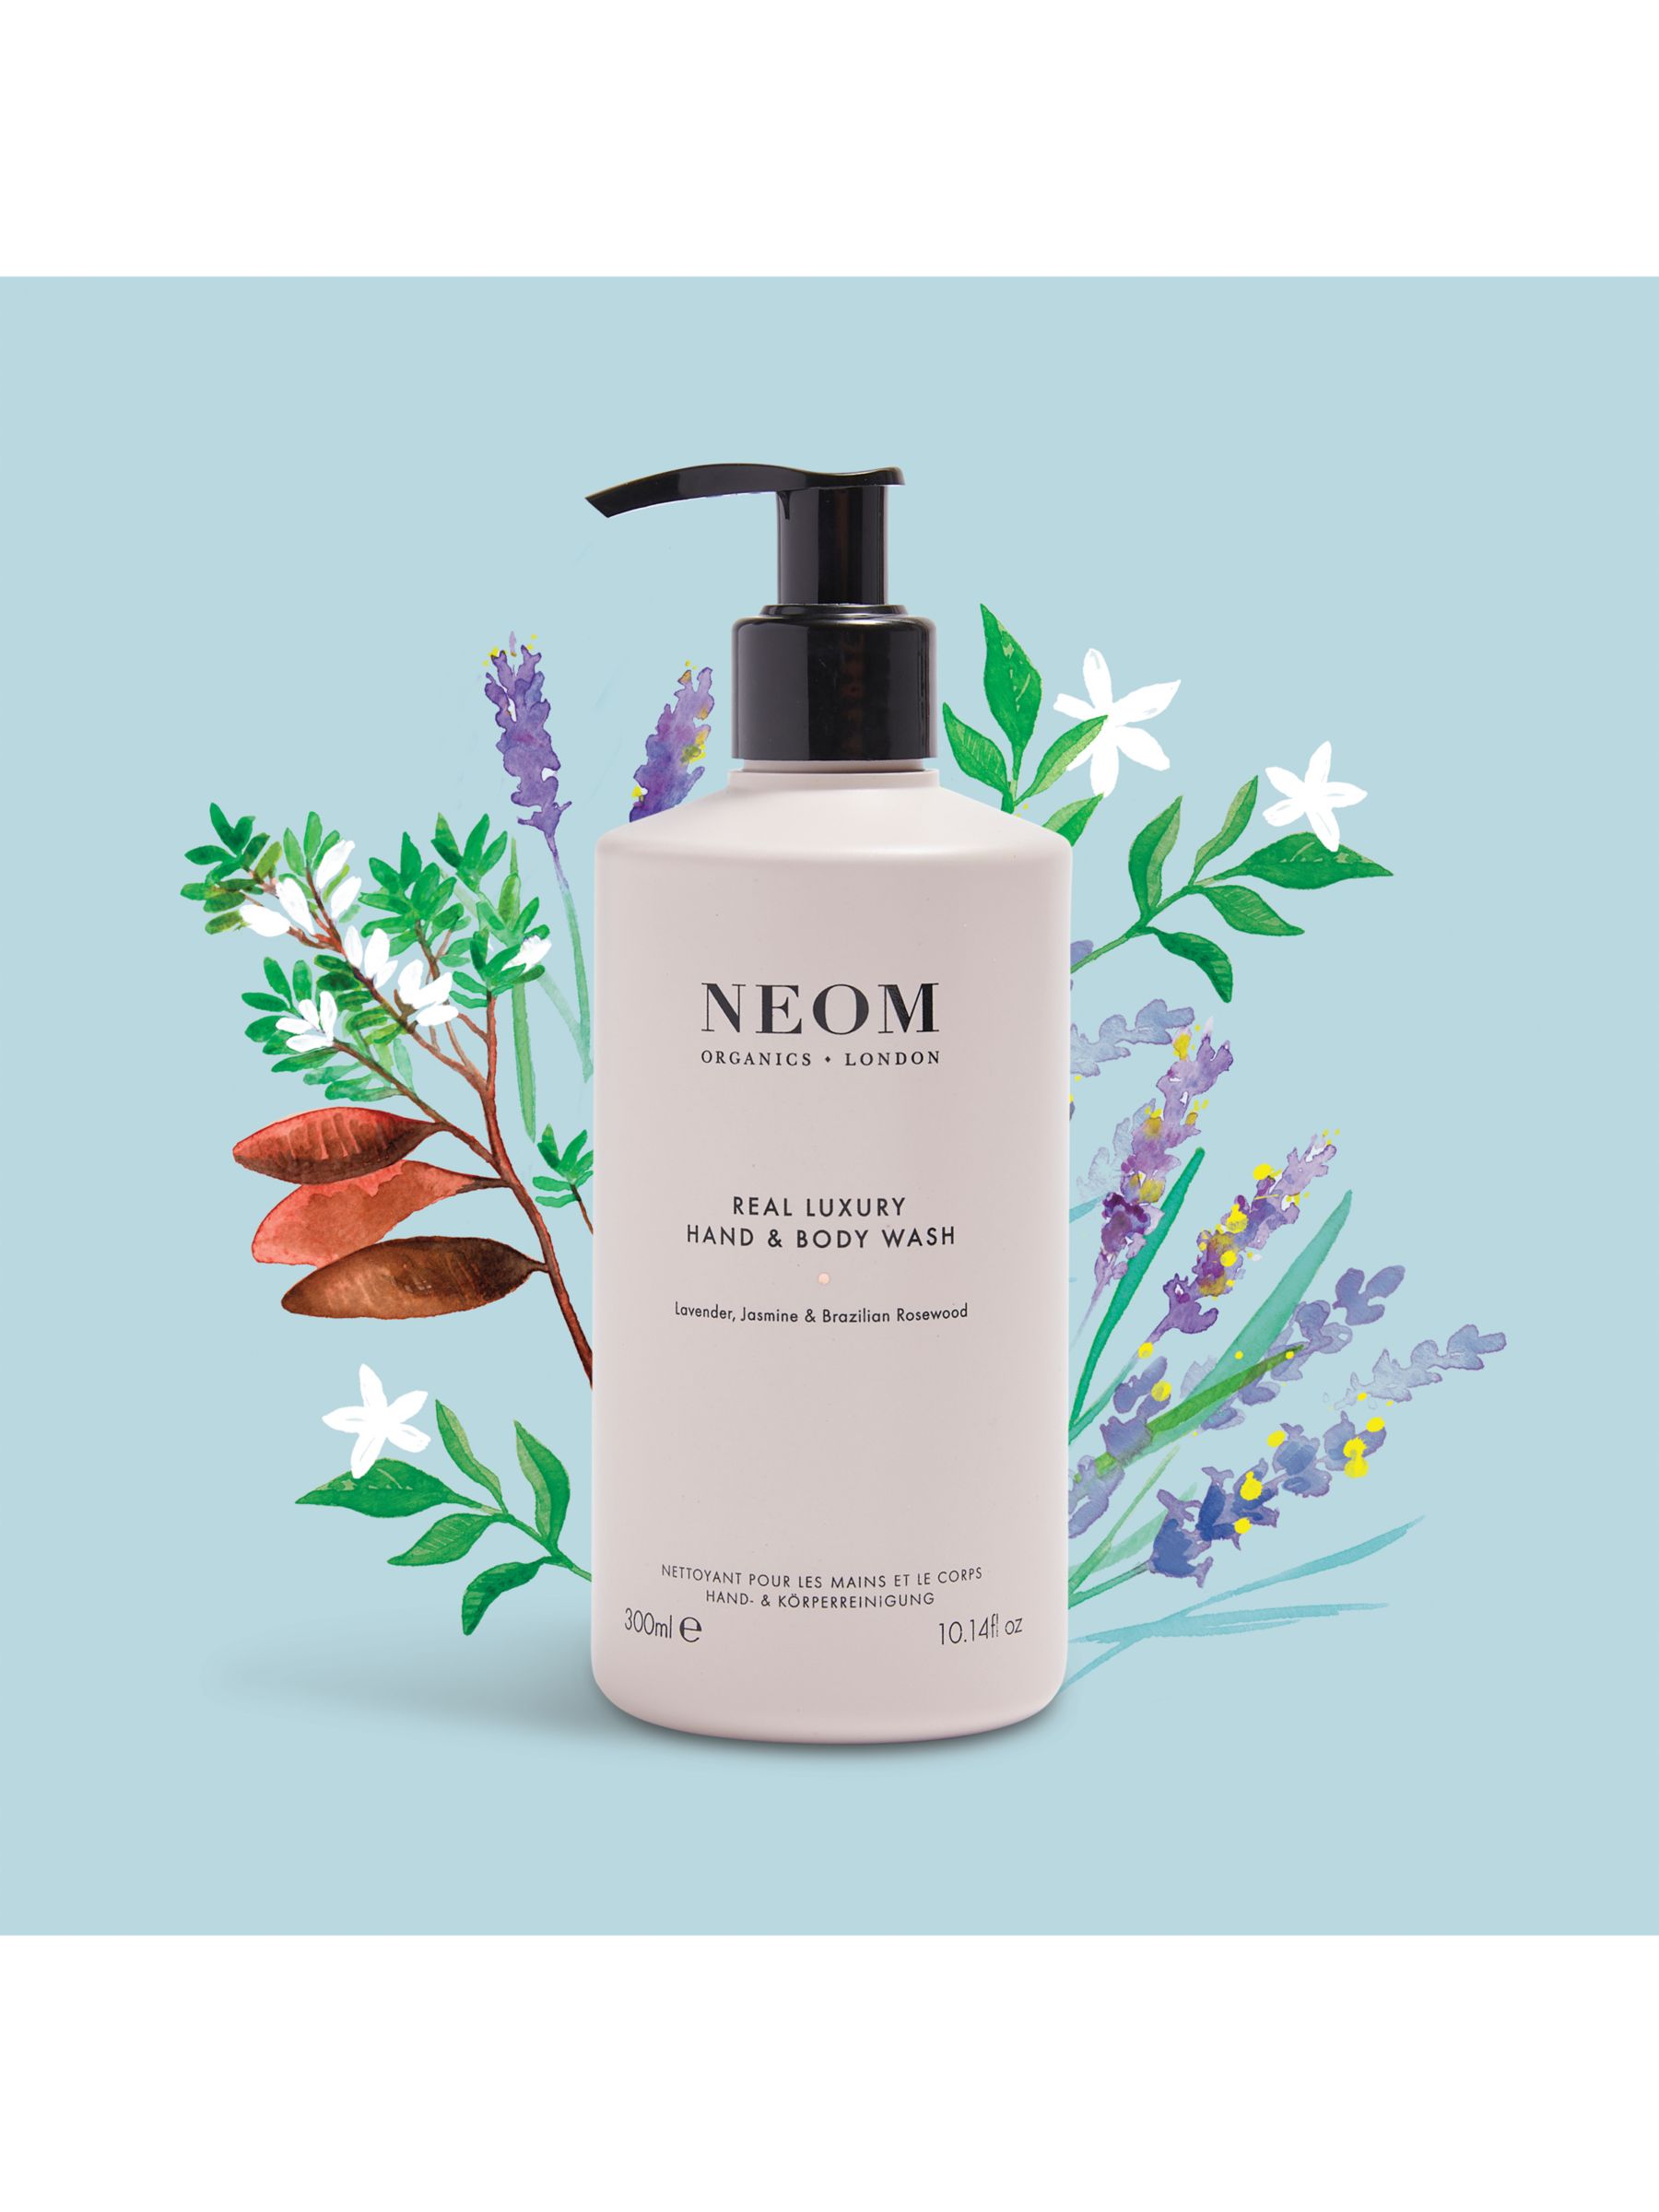 Neom Organics London  Real Luxury Hand & Body Wash, 300ml 5